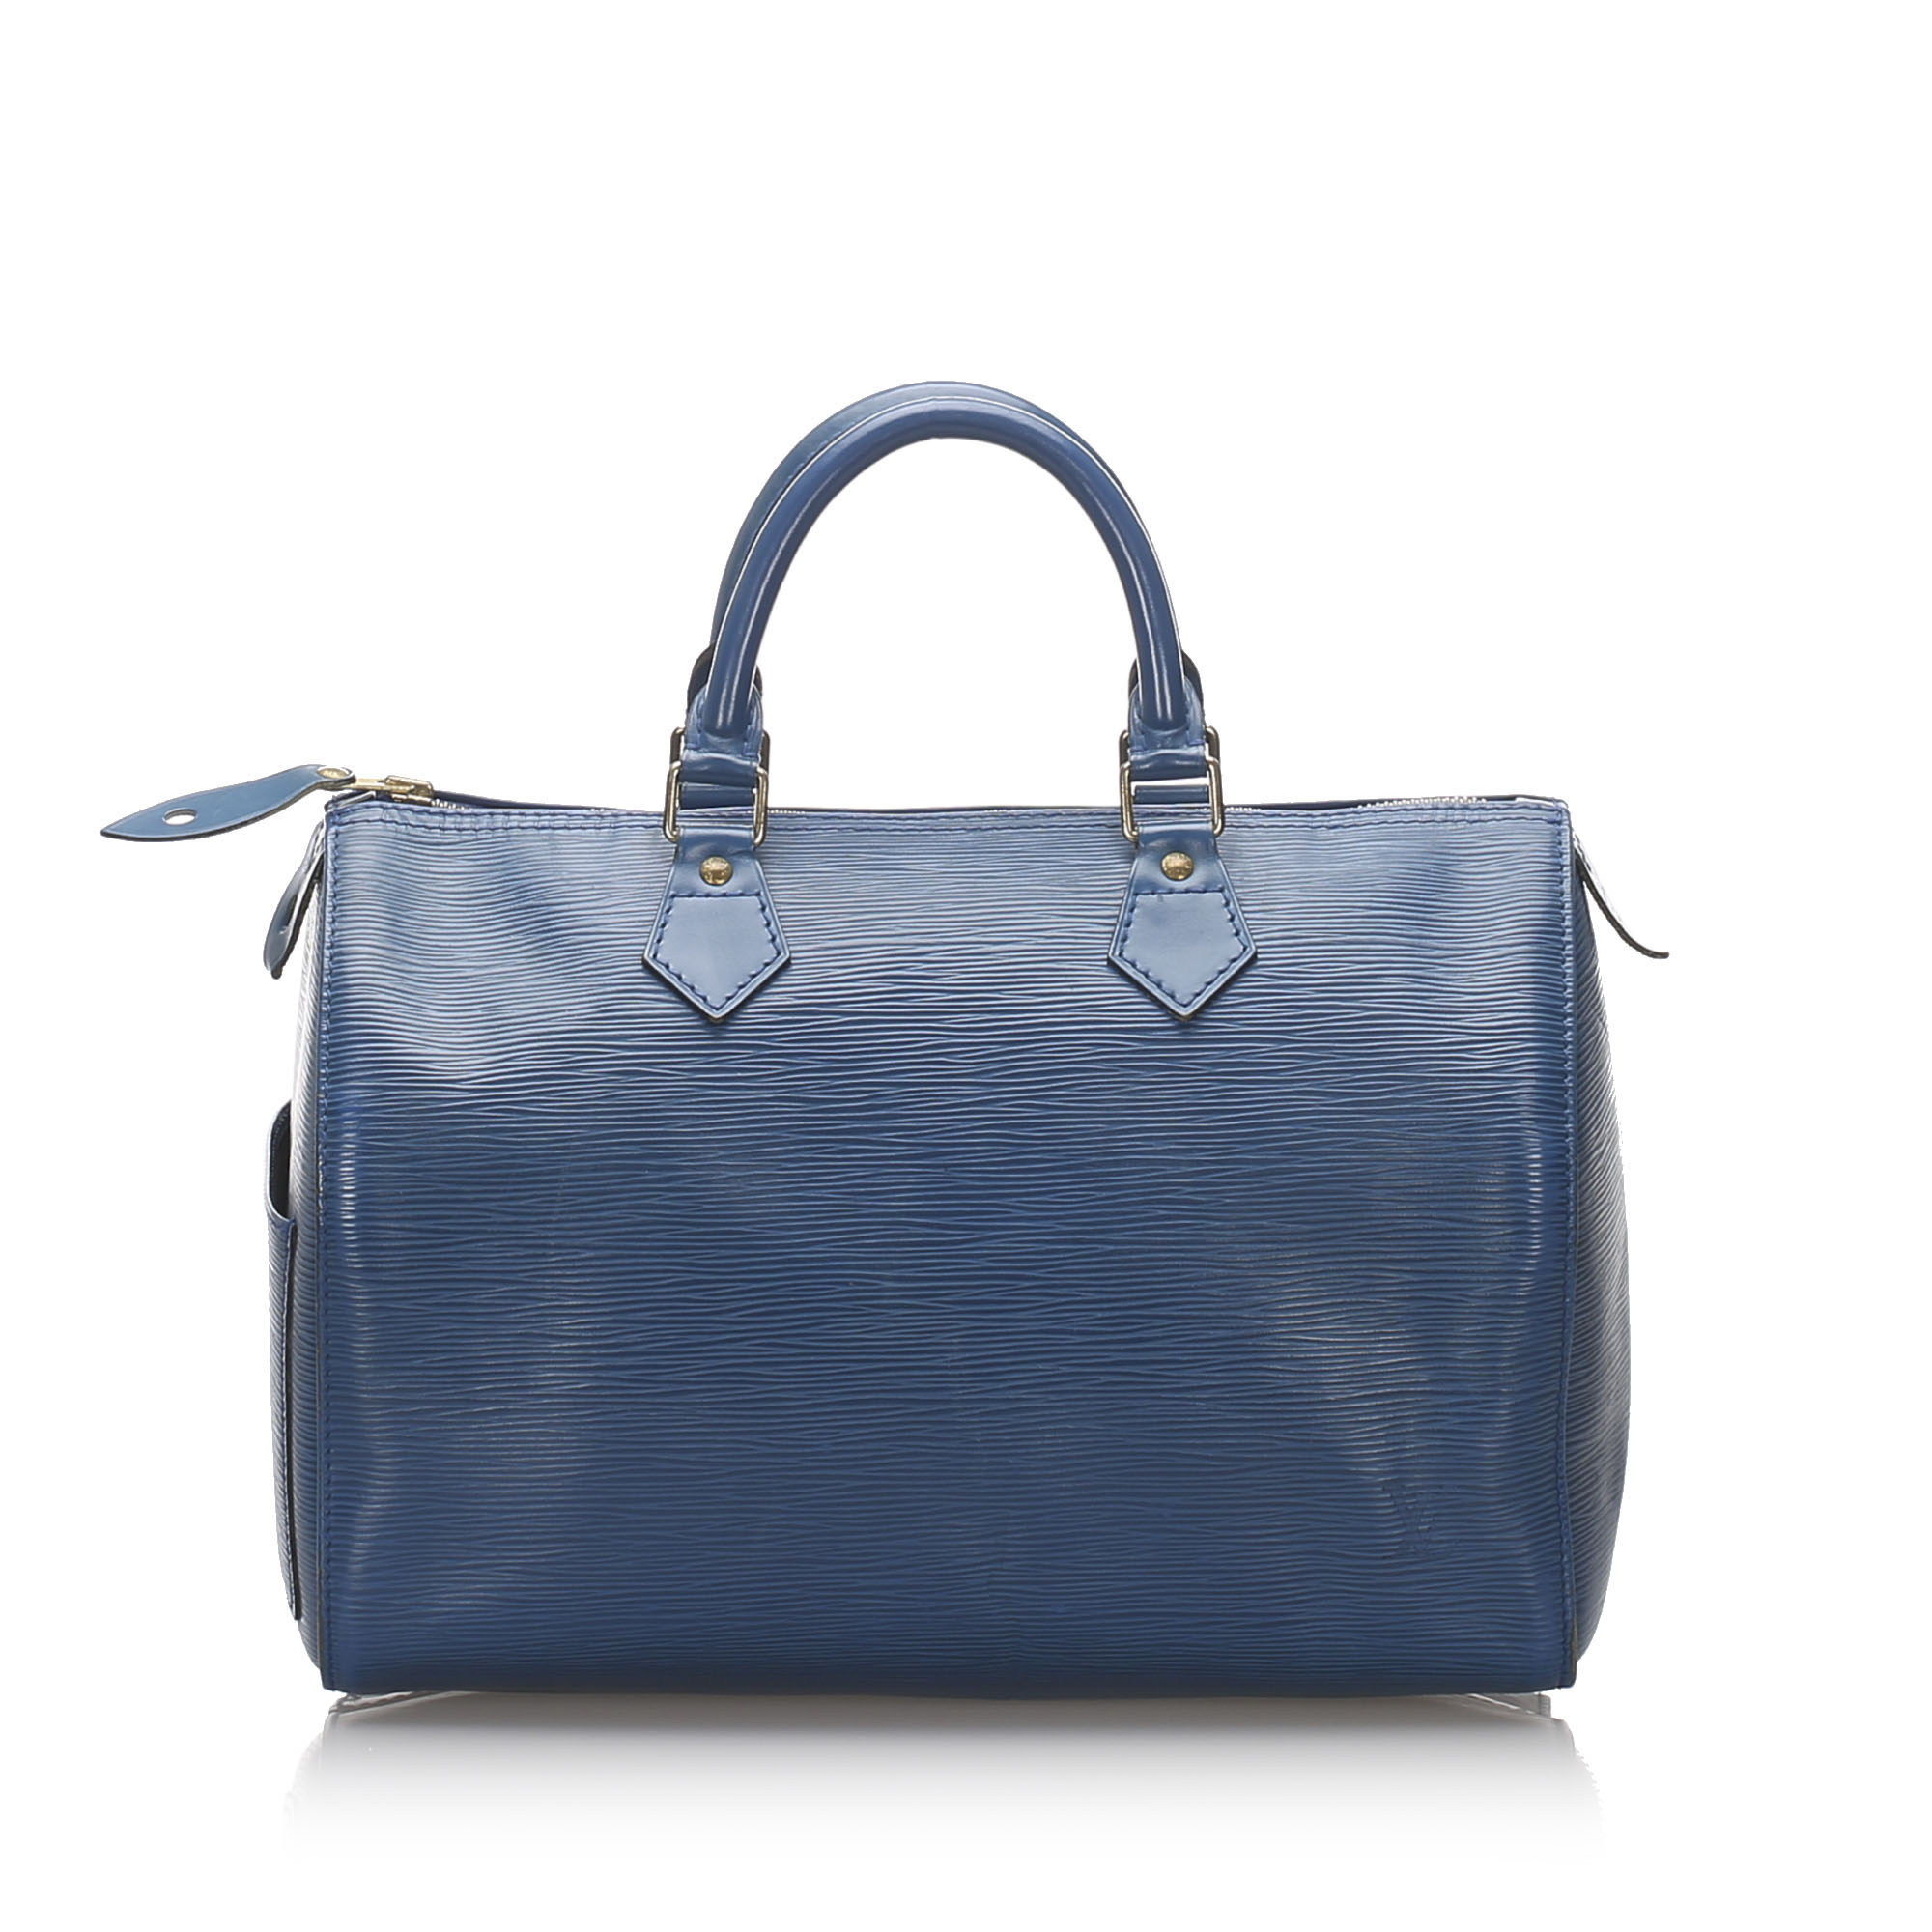 Pre-Loved Louis Vuitton Blue Epi Leather Speedy 30 France | eBay